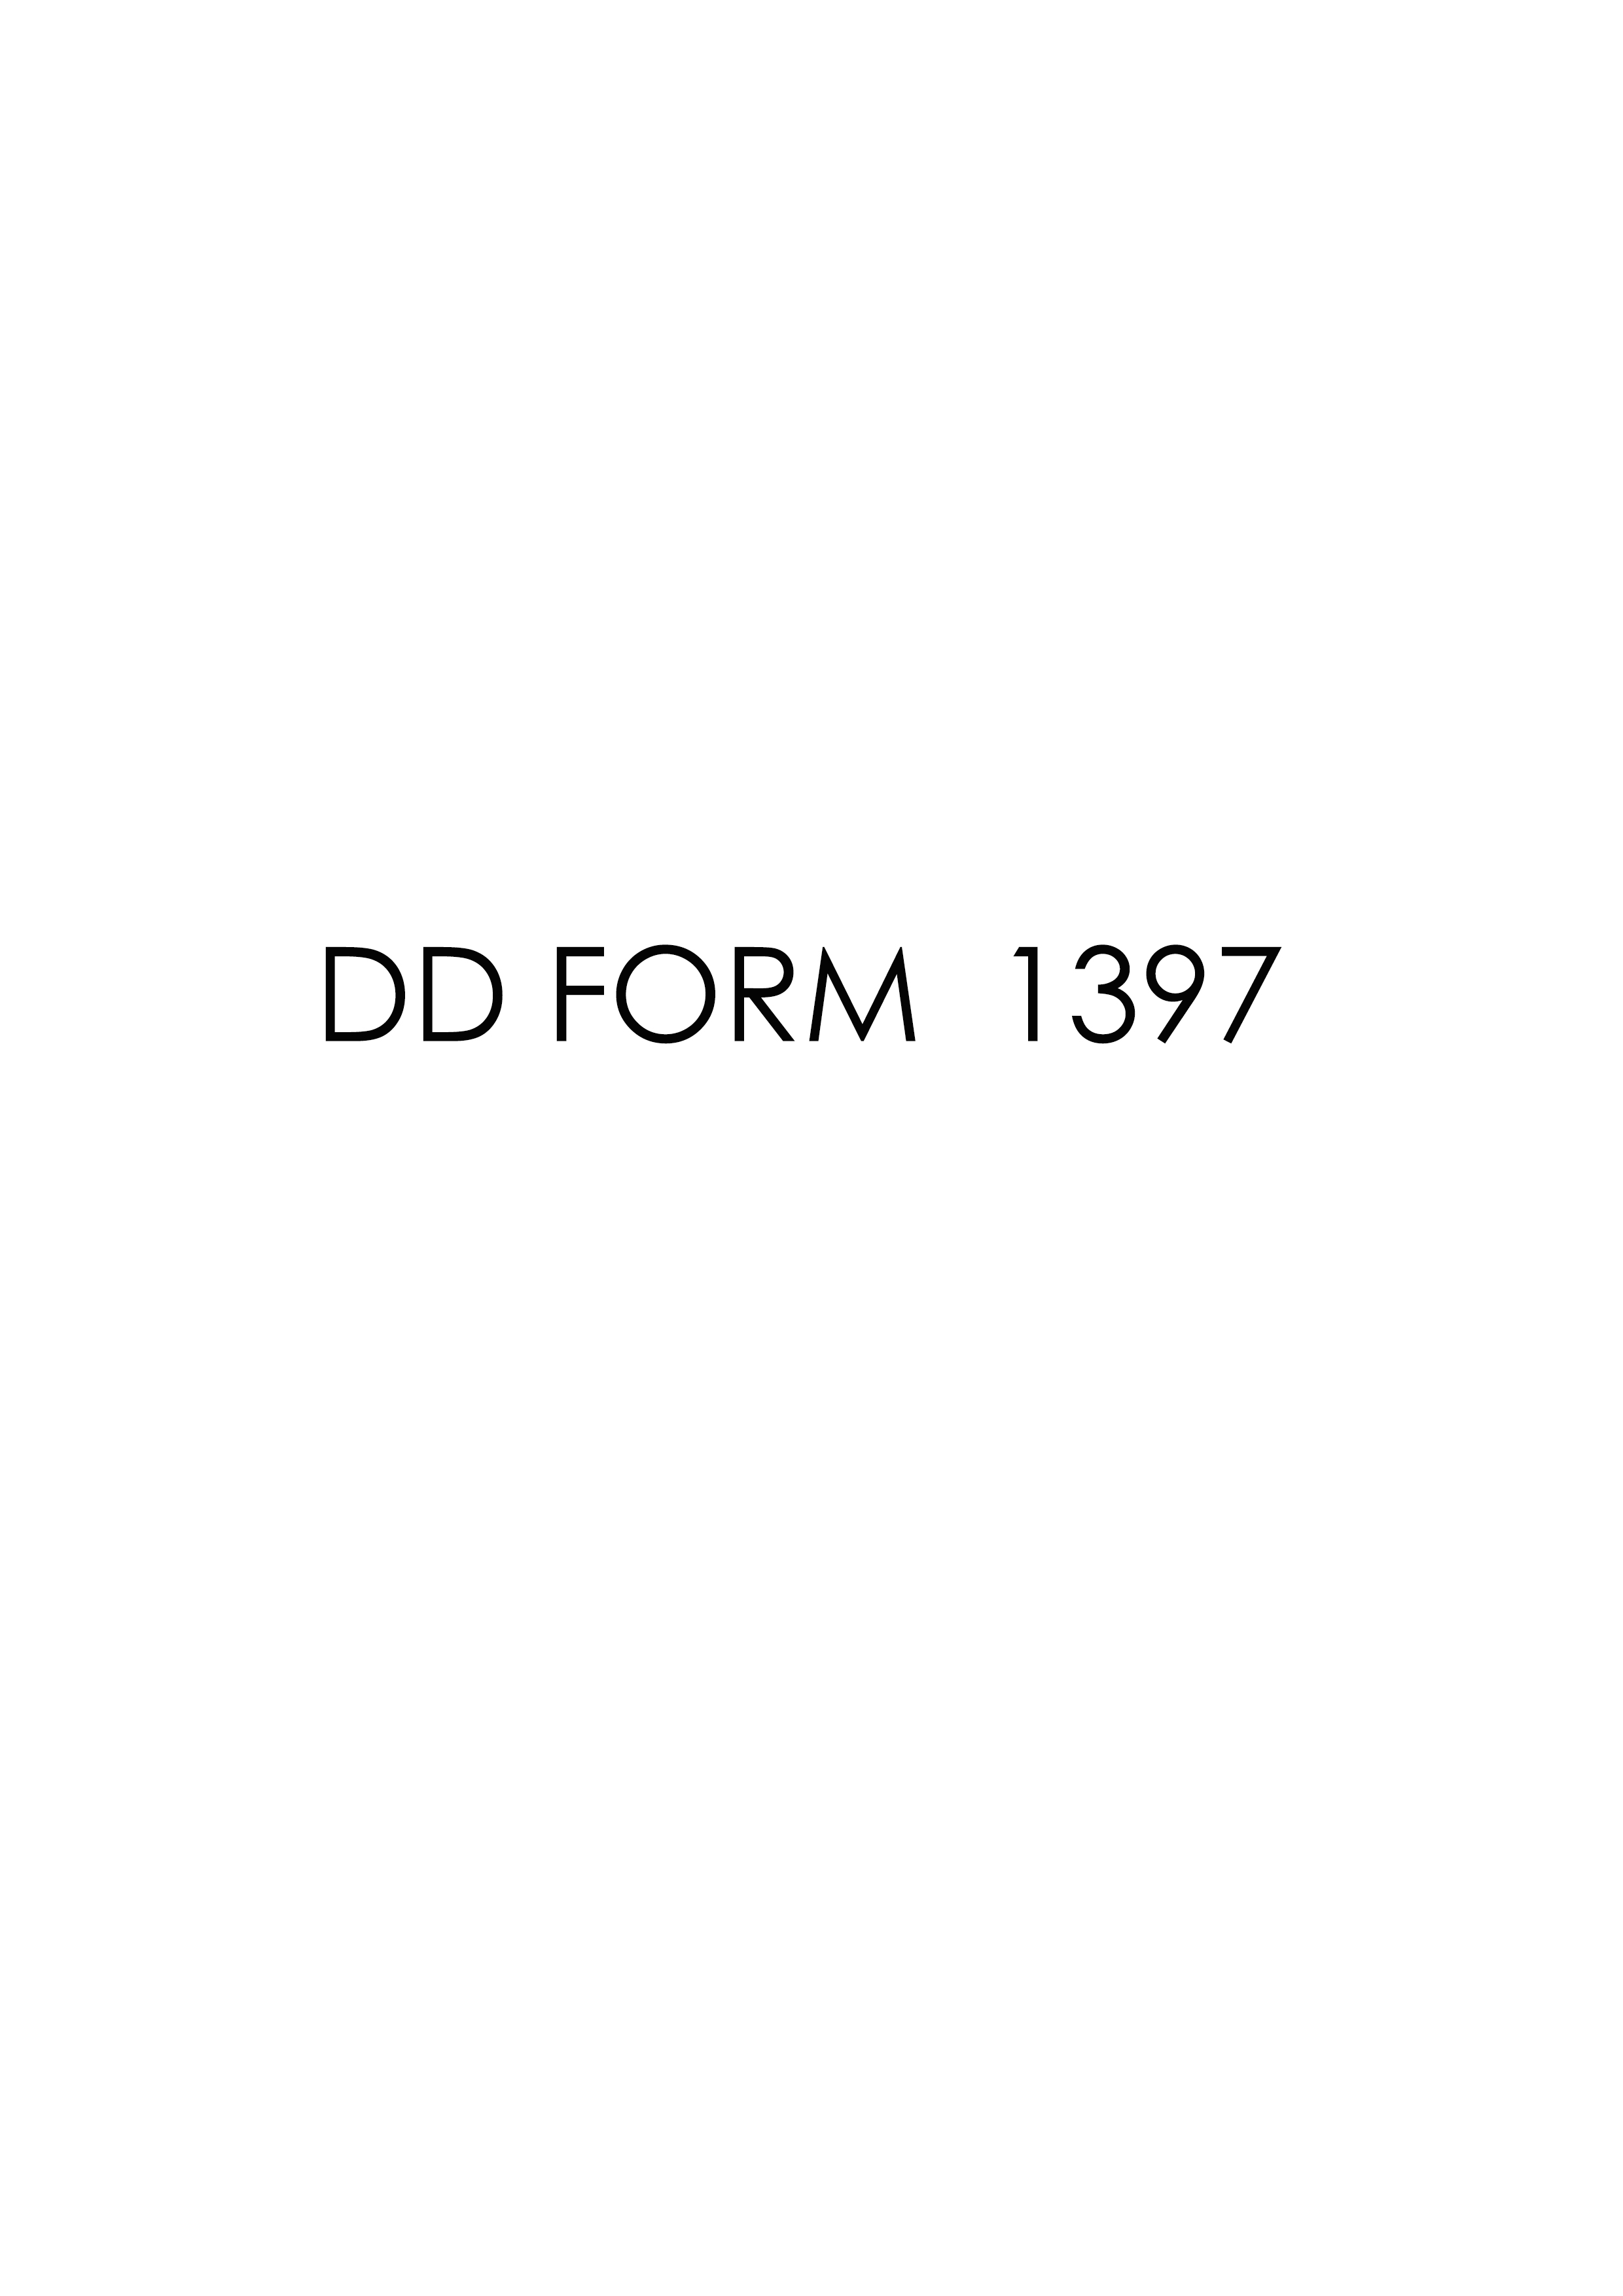 Download dd 1397 Form